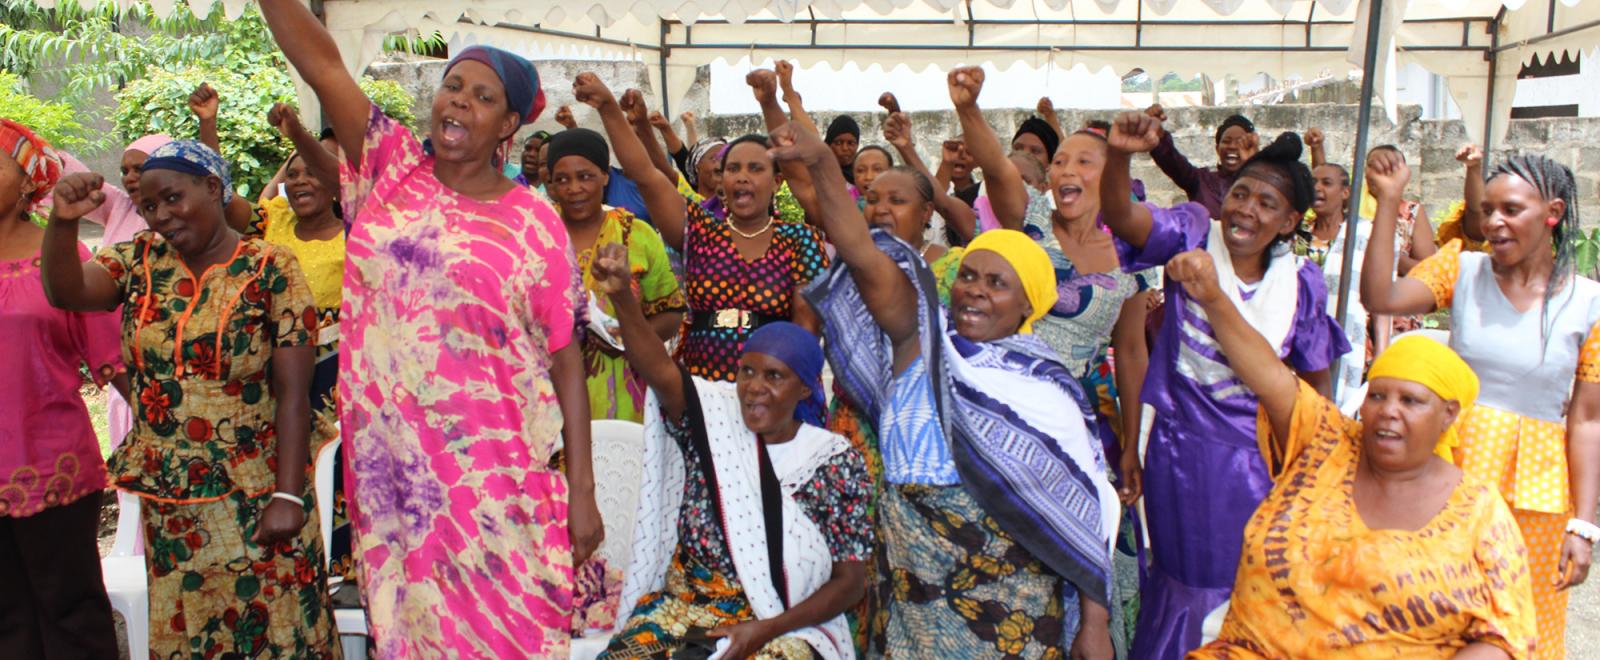 Local women attend an International Women's Day presentation at our women's empowerment program in Africa.